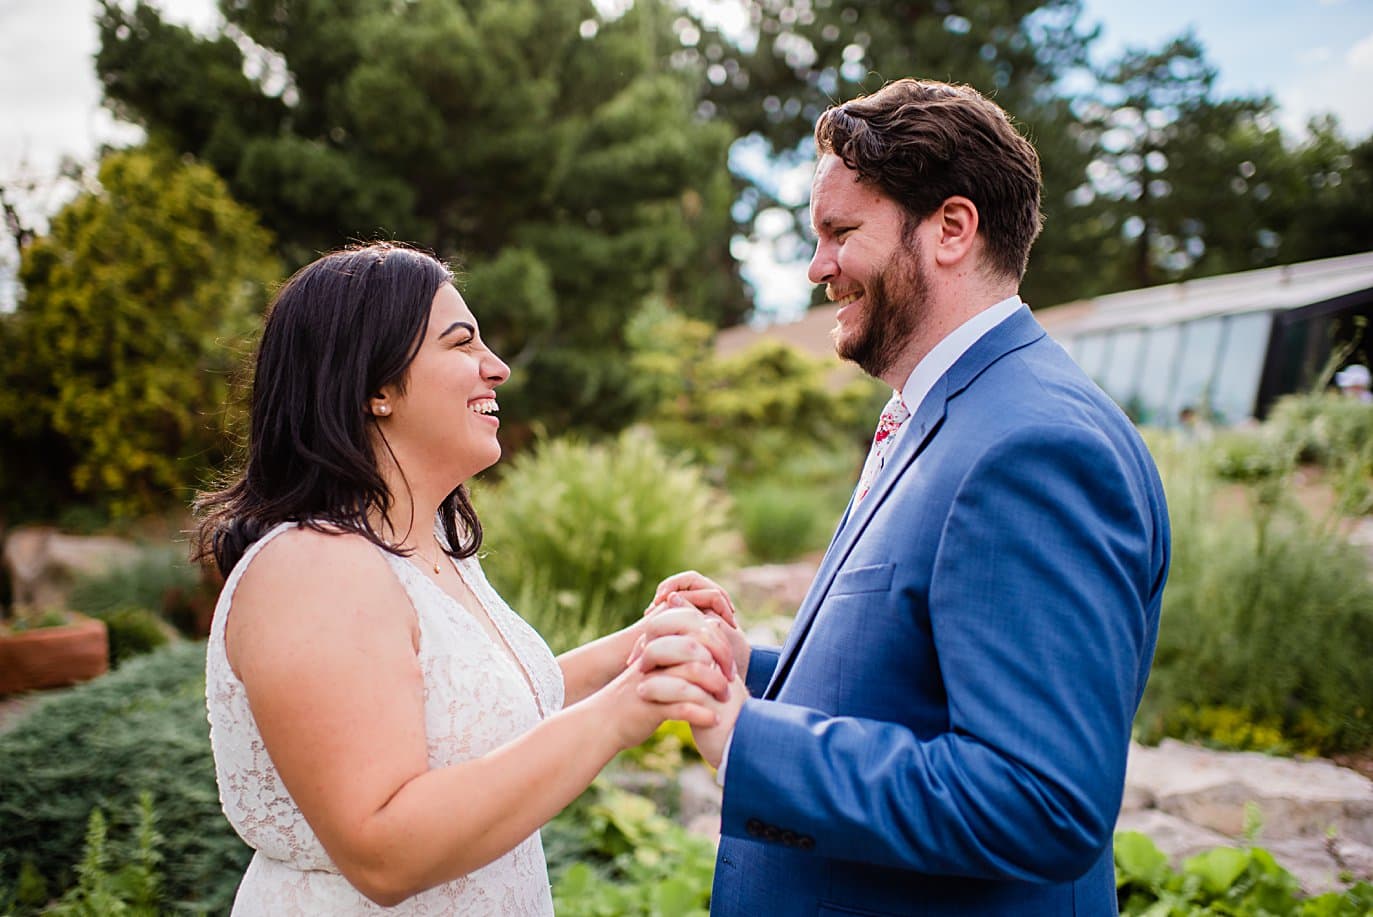 bride and groom intimate moment in garden at Denver Botanic Gardens wedding by Boulder Wedding Photographer Jennie Crate